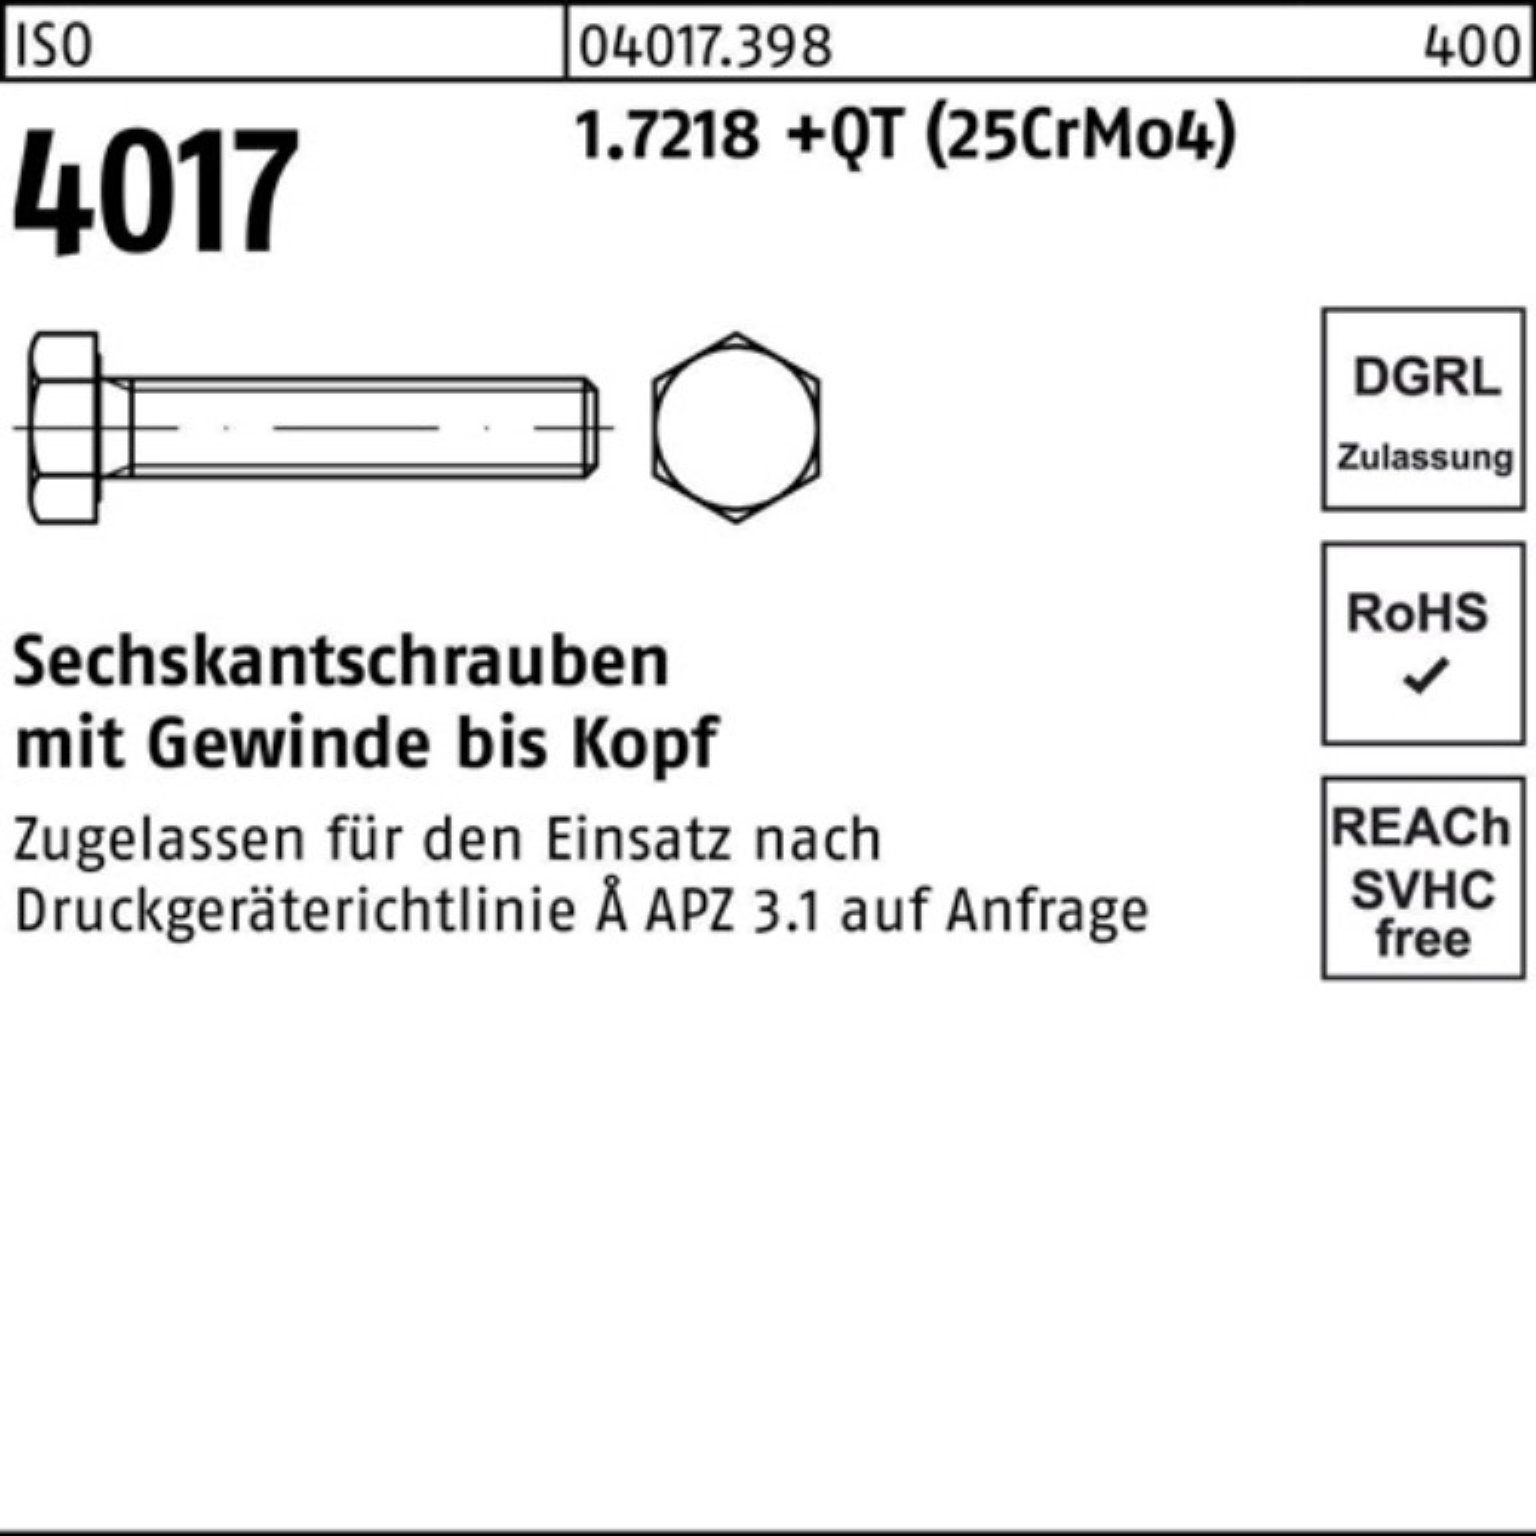 +QT VG Sechskantschraube 1.7218 Sechskantschraube Bufab Pack (25CrMo4) 40 M12x 4017 100er ISO